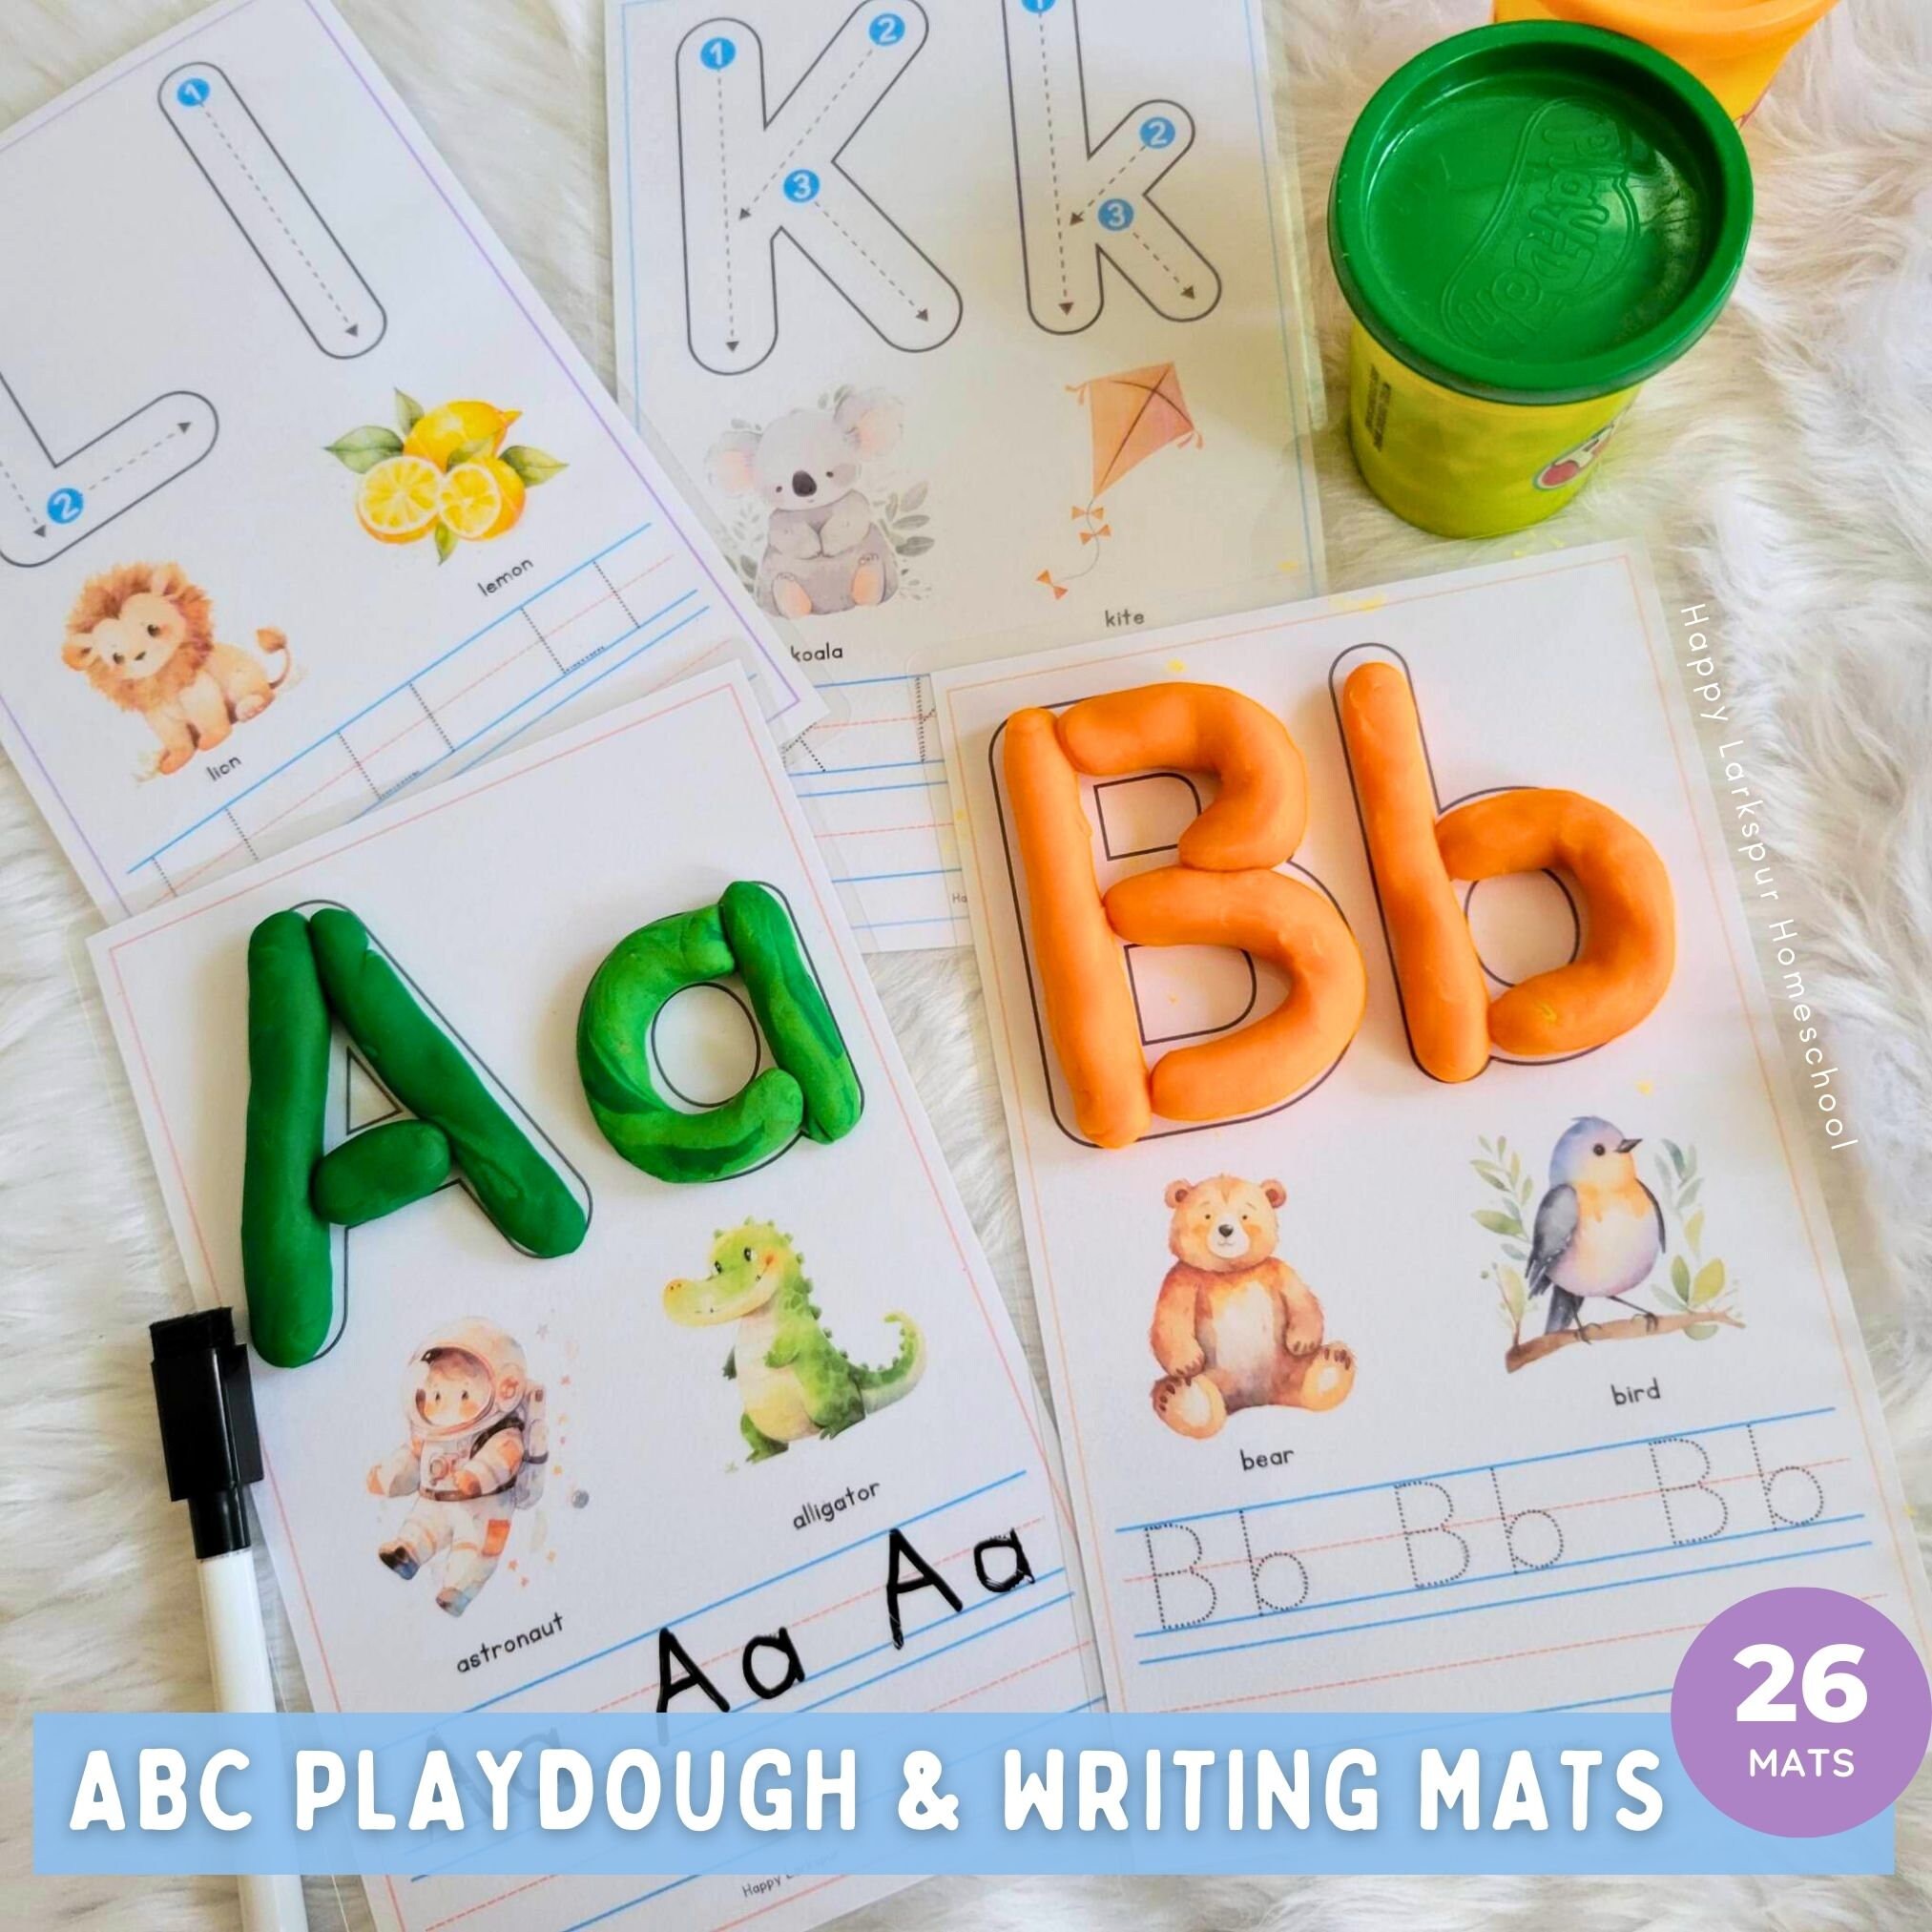 Cursive Name Writing Worksheet, Printable Handwriting Copywork, Script  Alphabet Tracing Activities Number Practice Mat Montessori Homeschool 